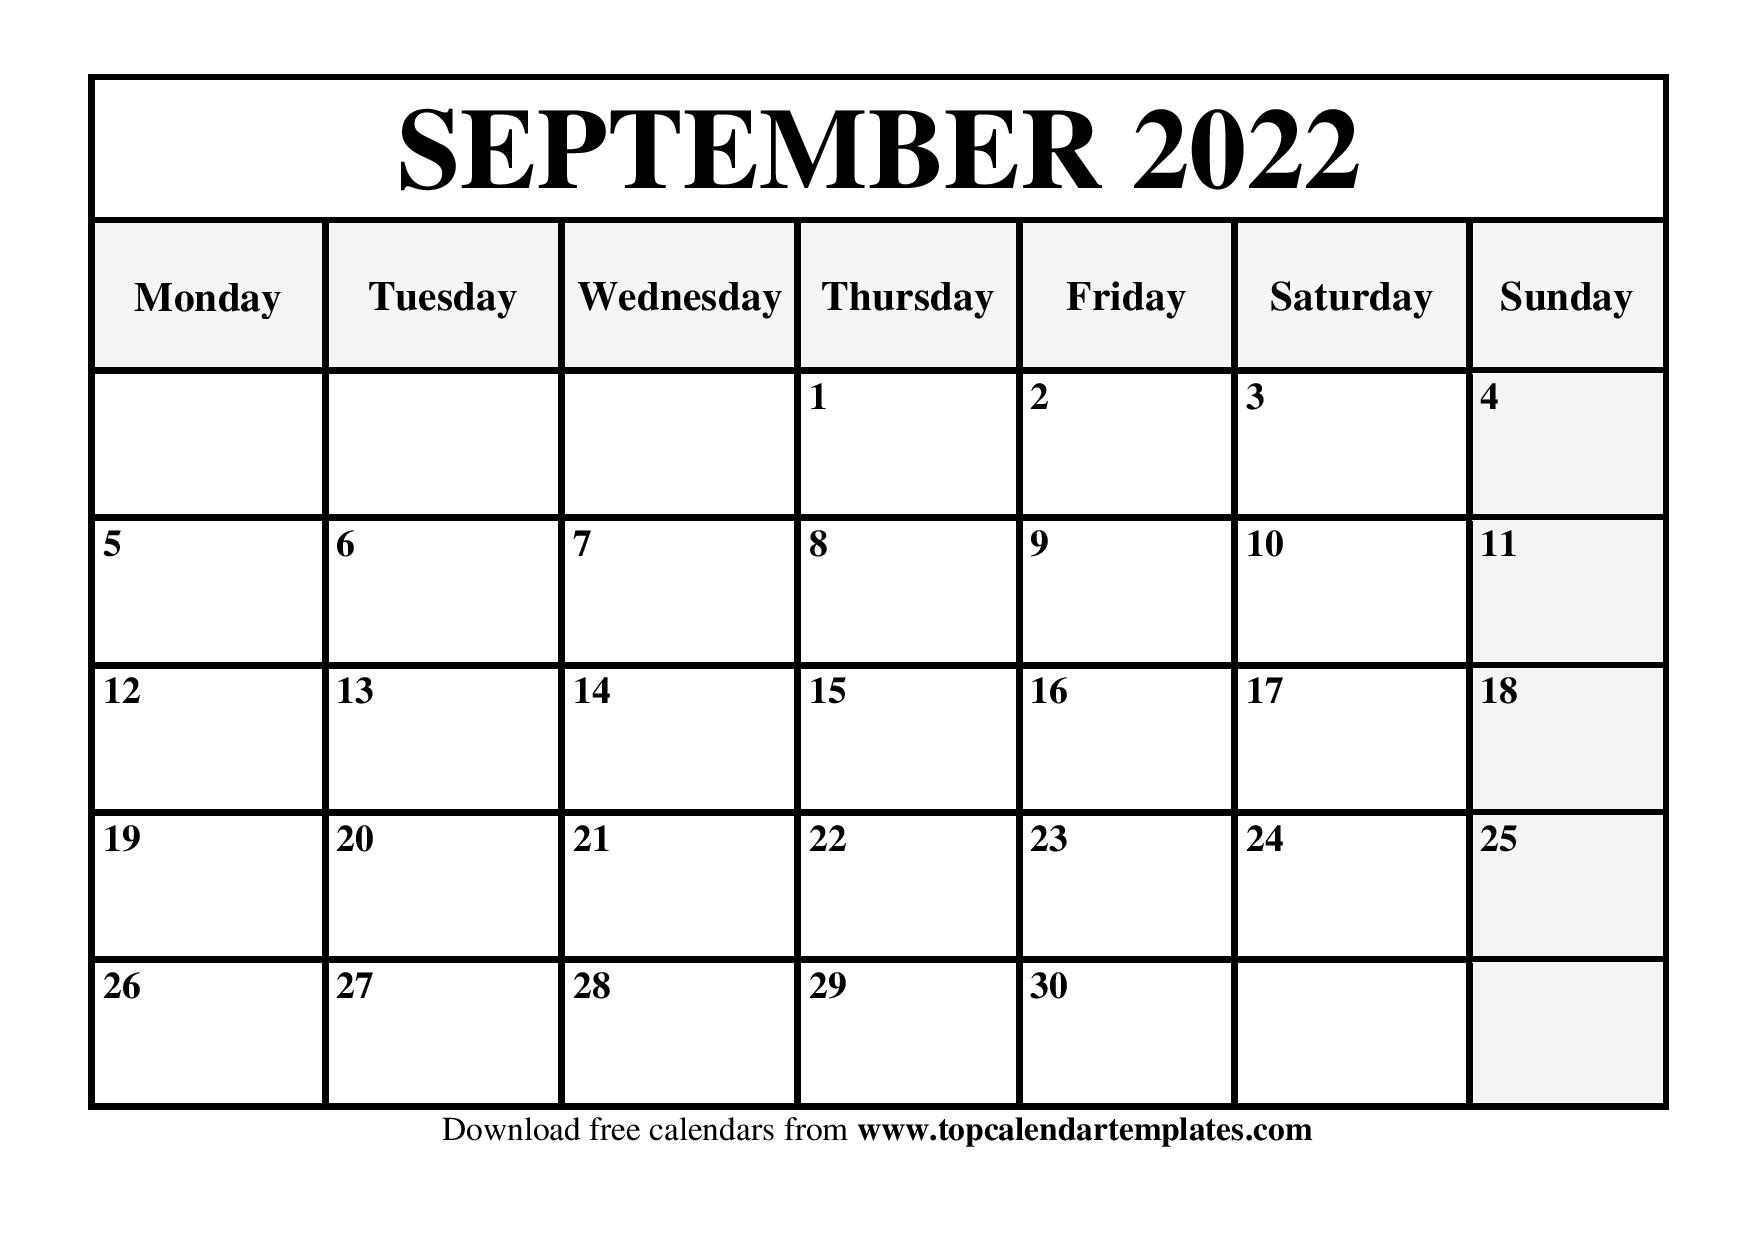 Free Printable September 2022 Calendar Printable Calendar September 2022 Templates - Pdf, Word, Excel